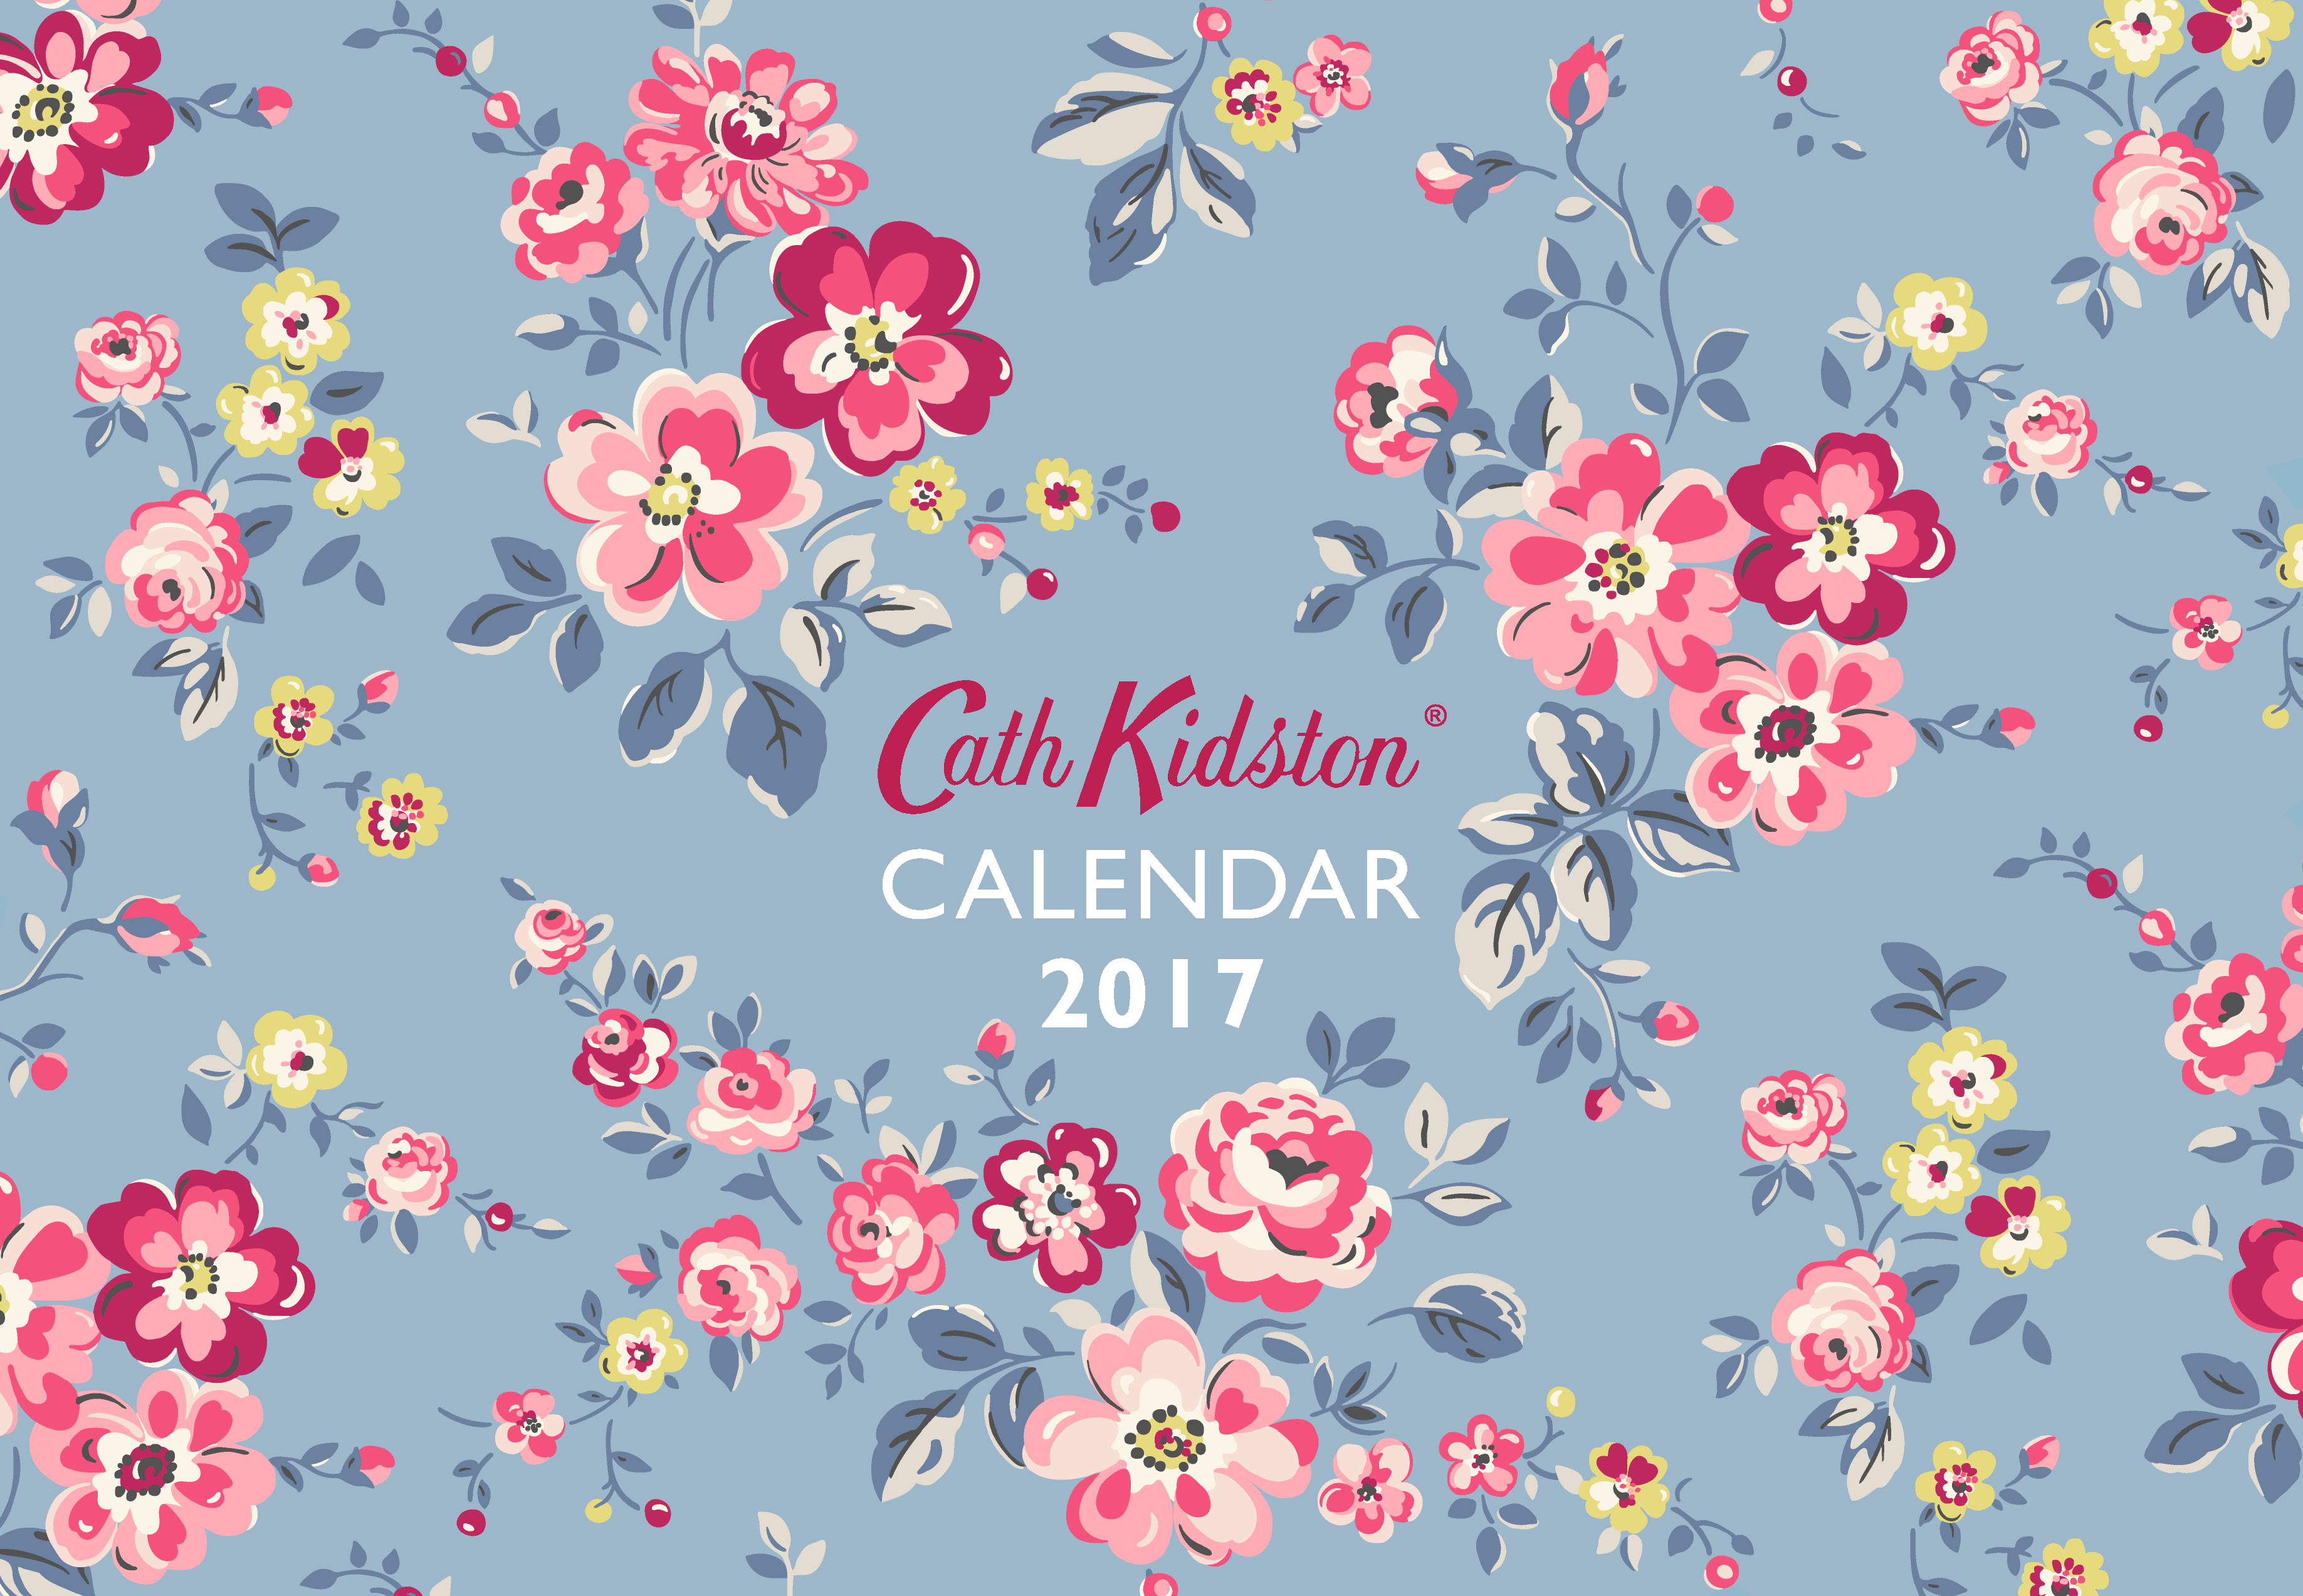 Calendar 2017 - Cath Kidston | Quadrille Publishing